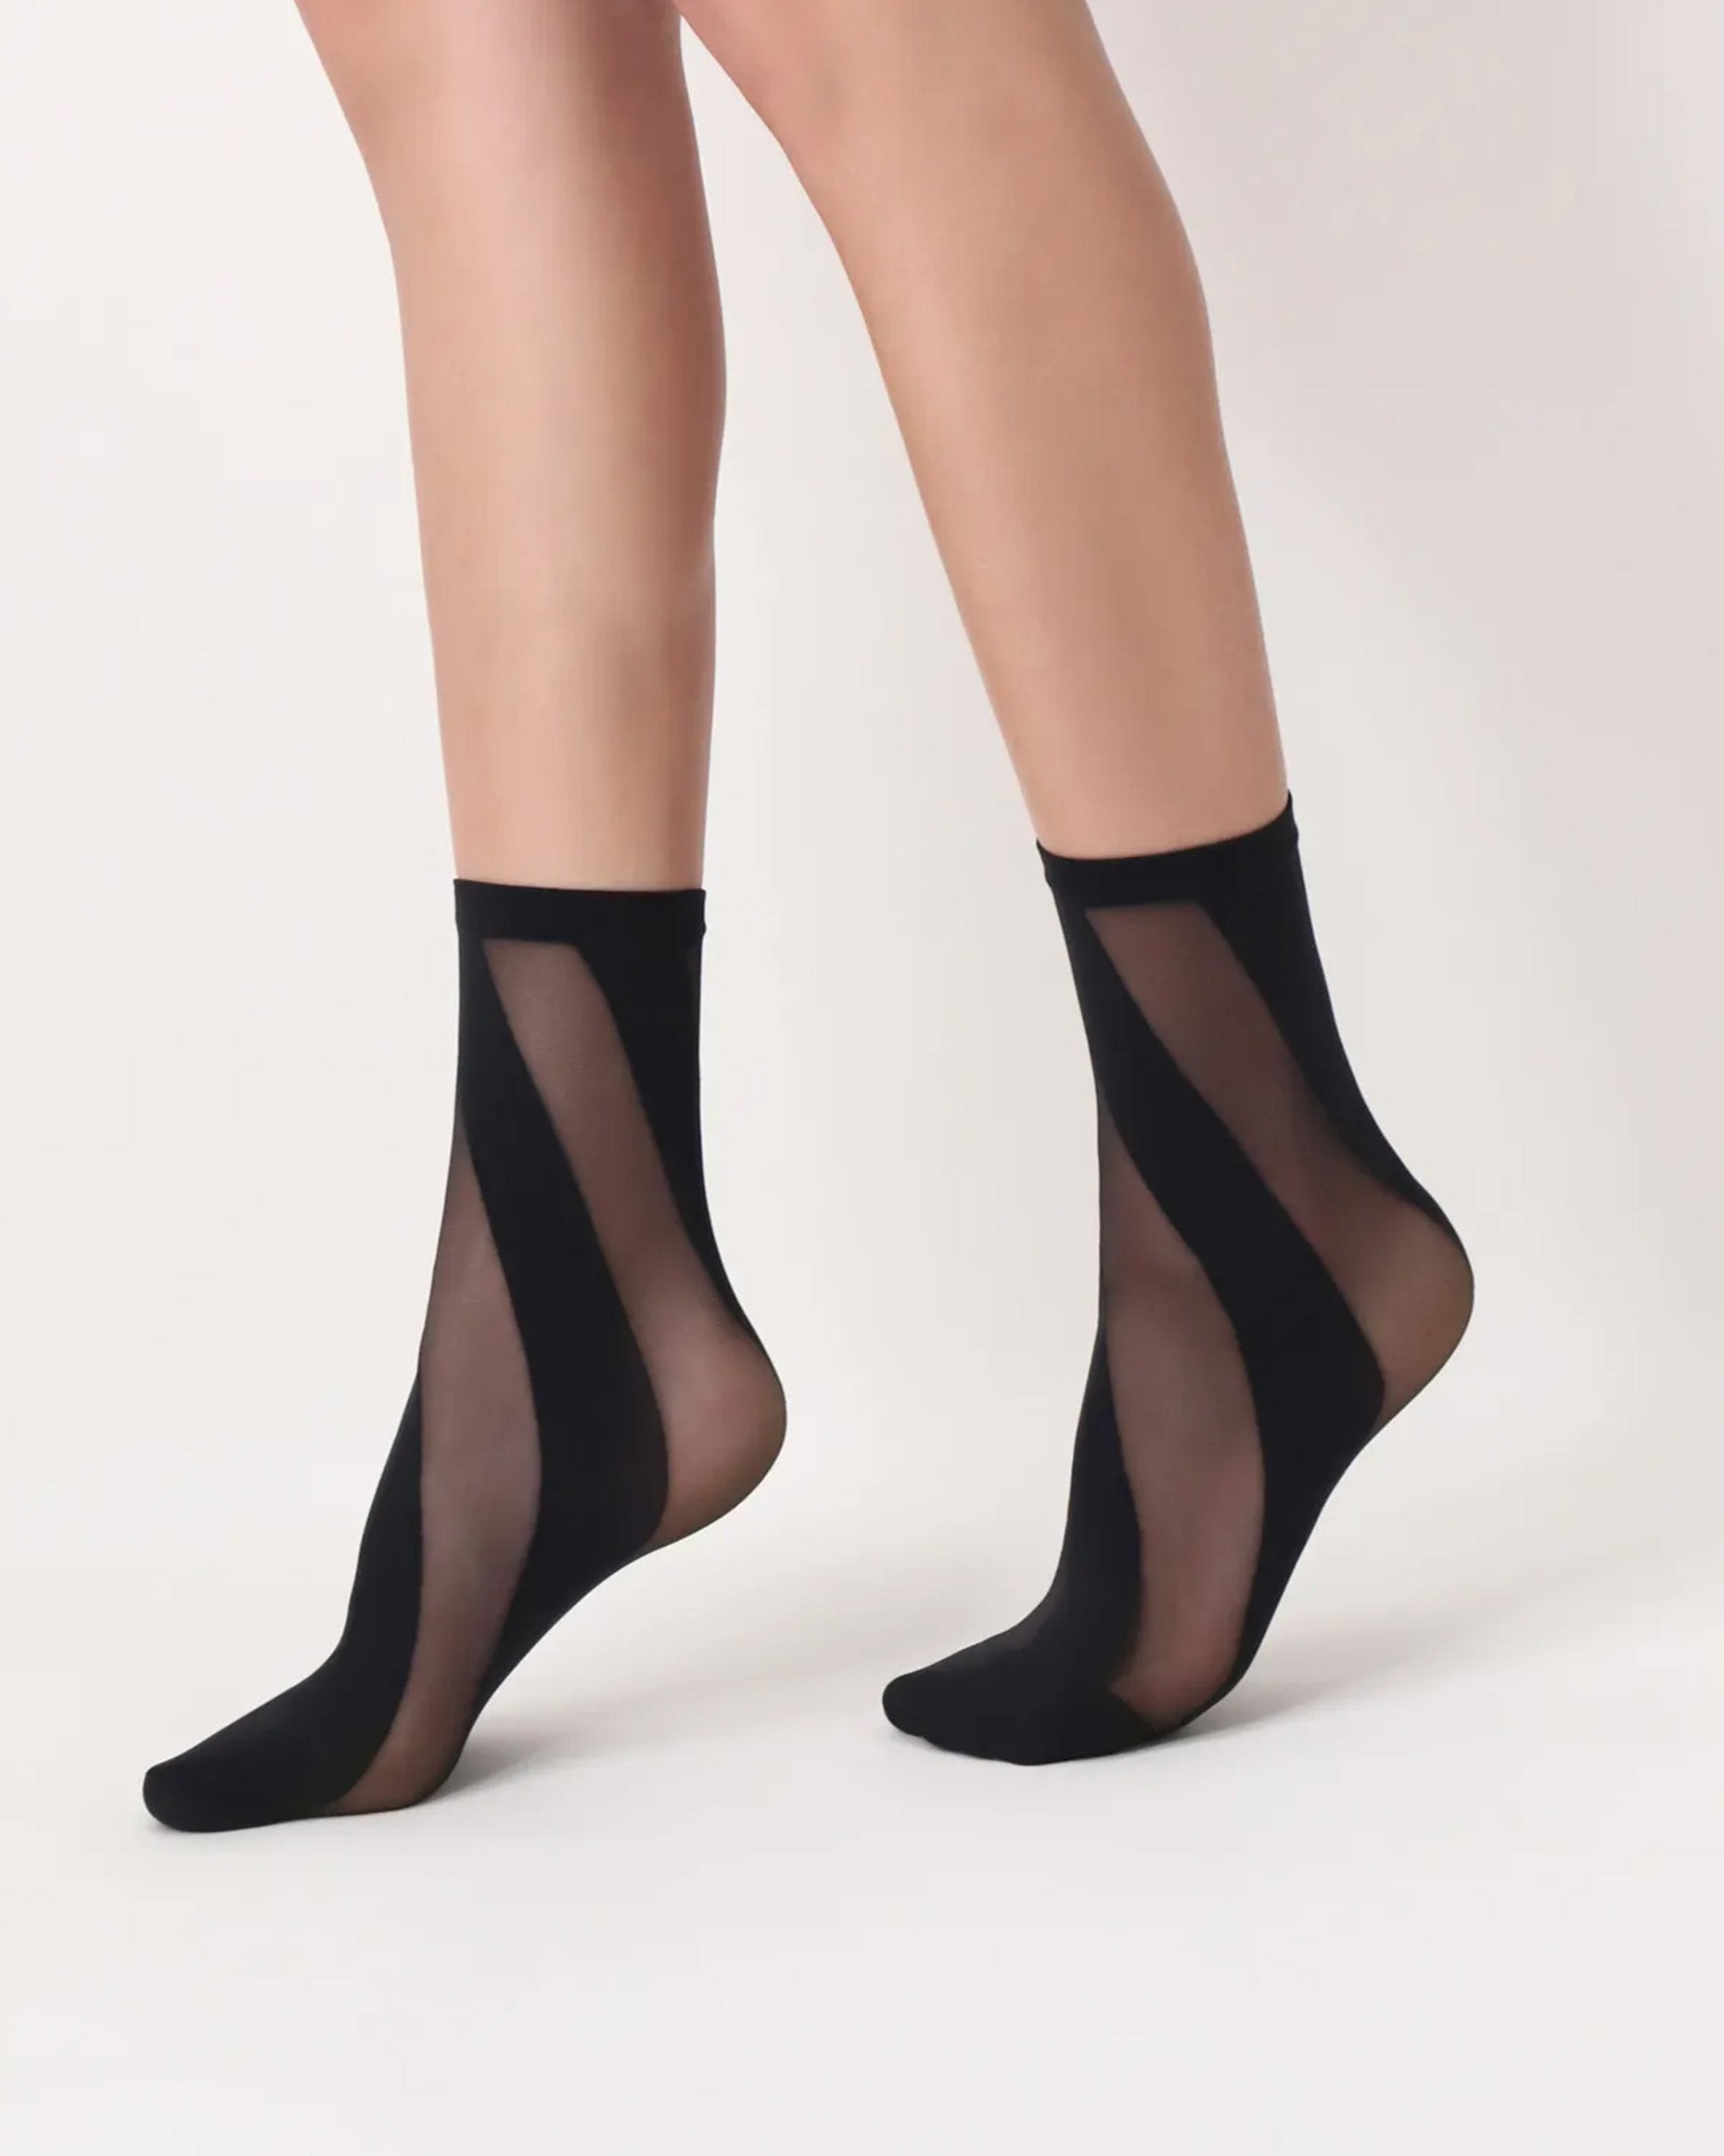 Girls' Tights & Socks, Plain & Patterned